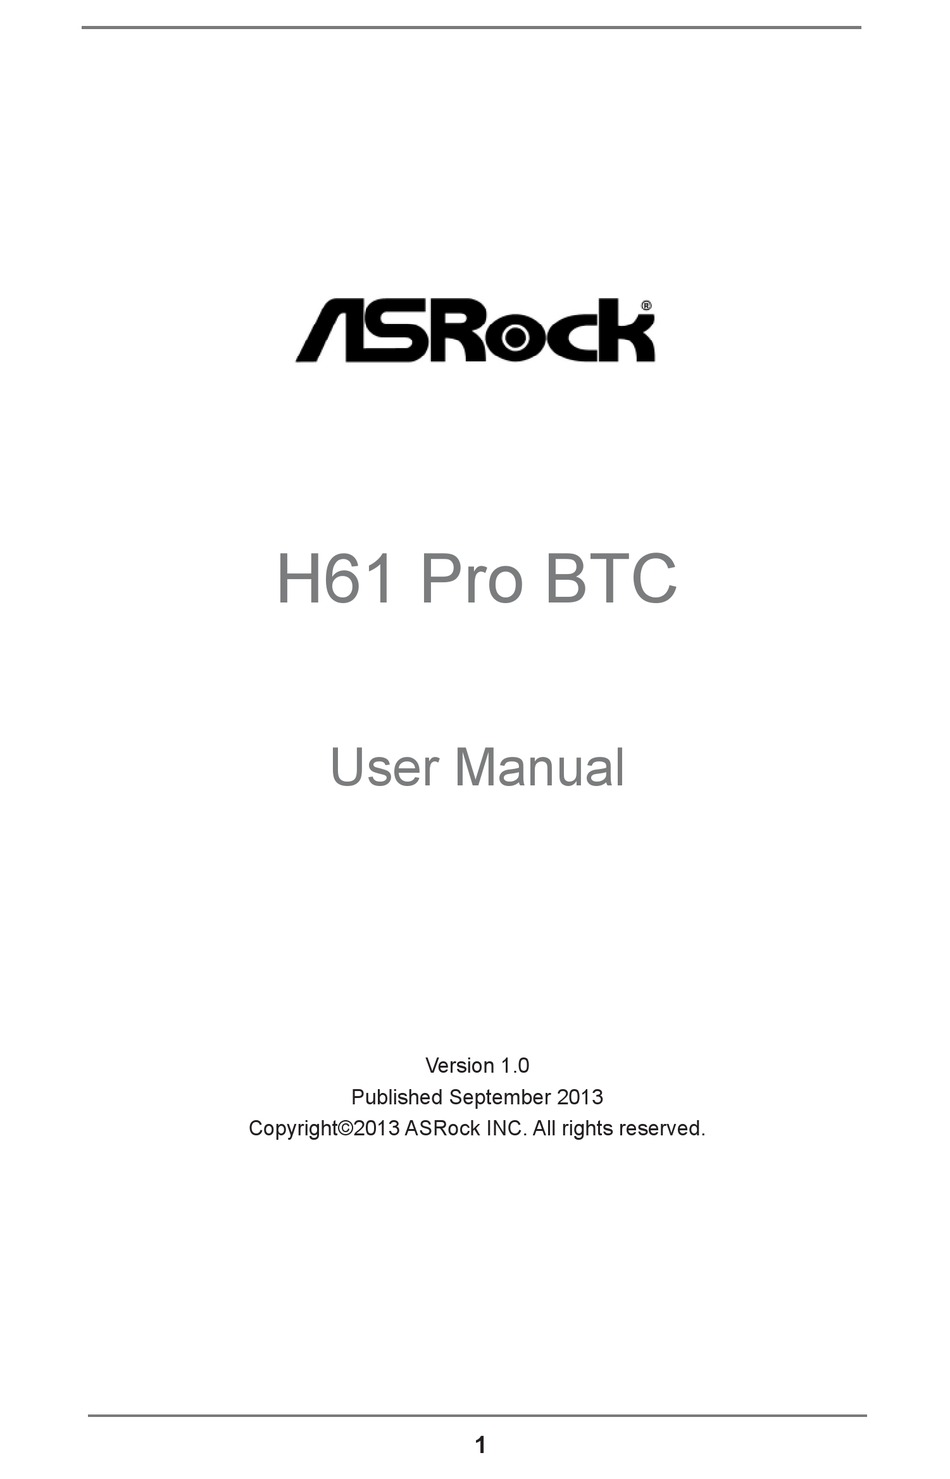 asrock pro btc manual